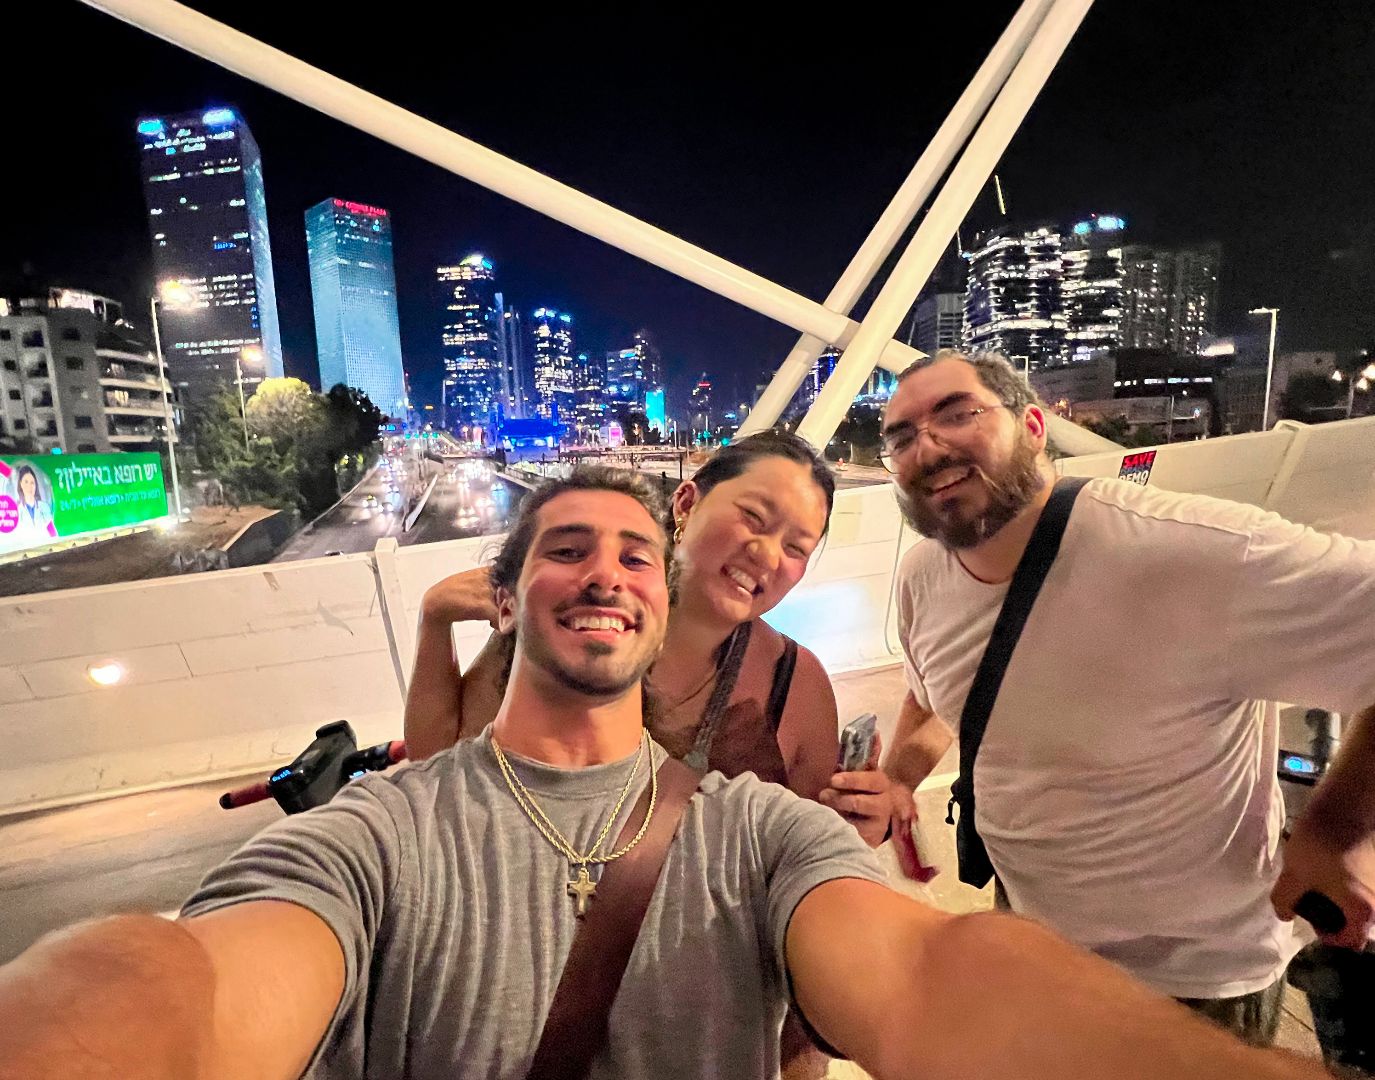 Luke and friends at night taking a selfie on a bridge in Israel